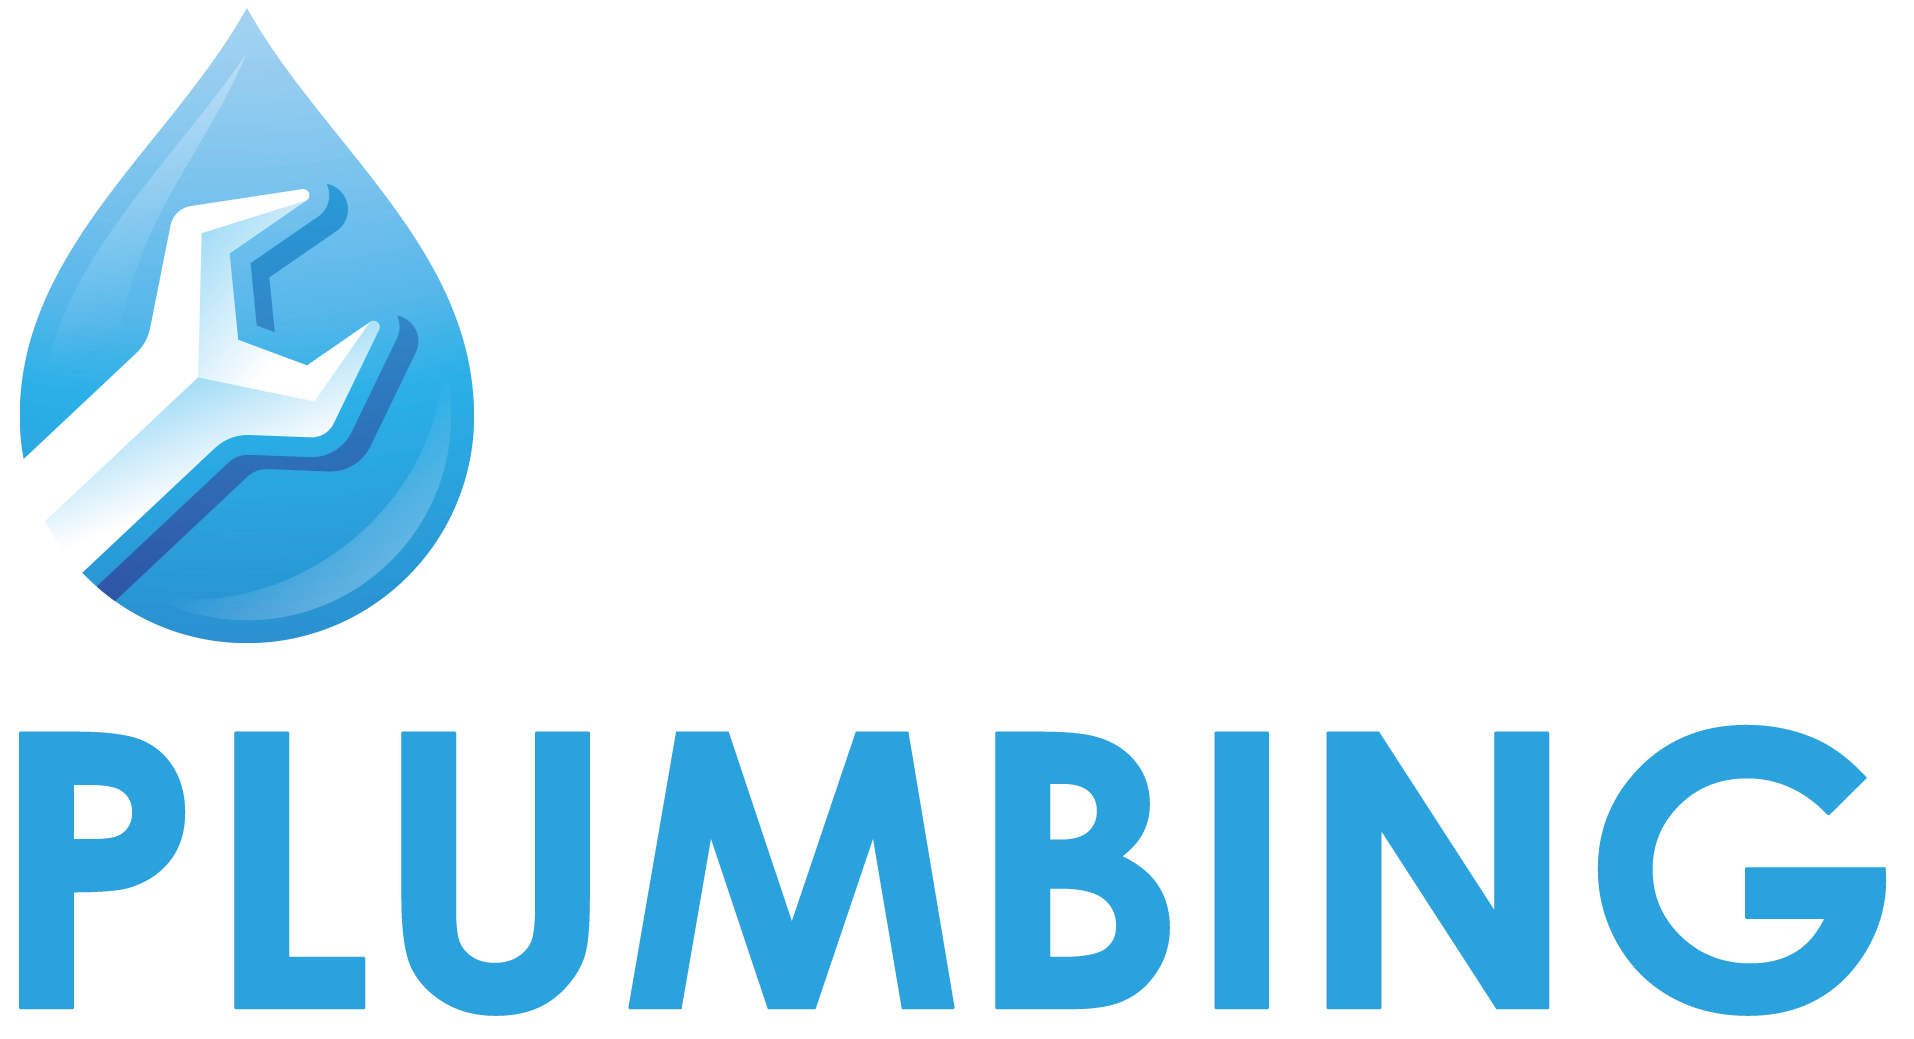 MCK Plumbing Logo